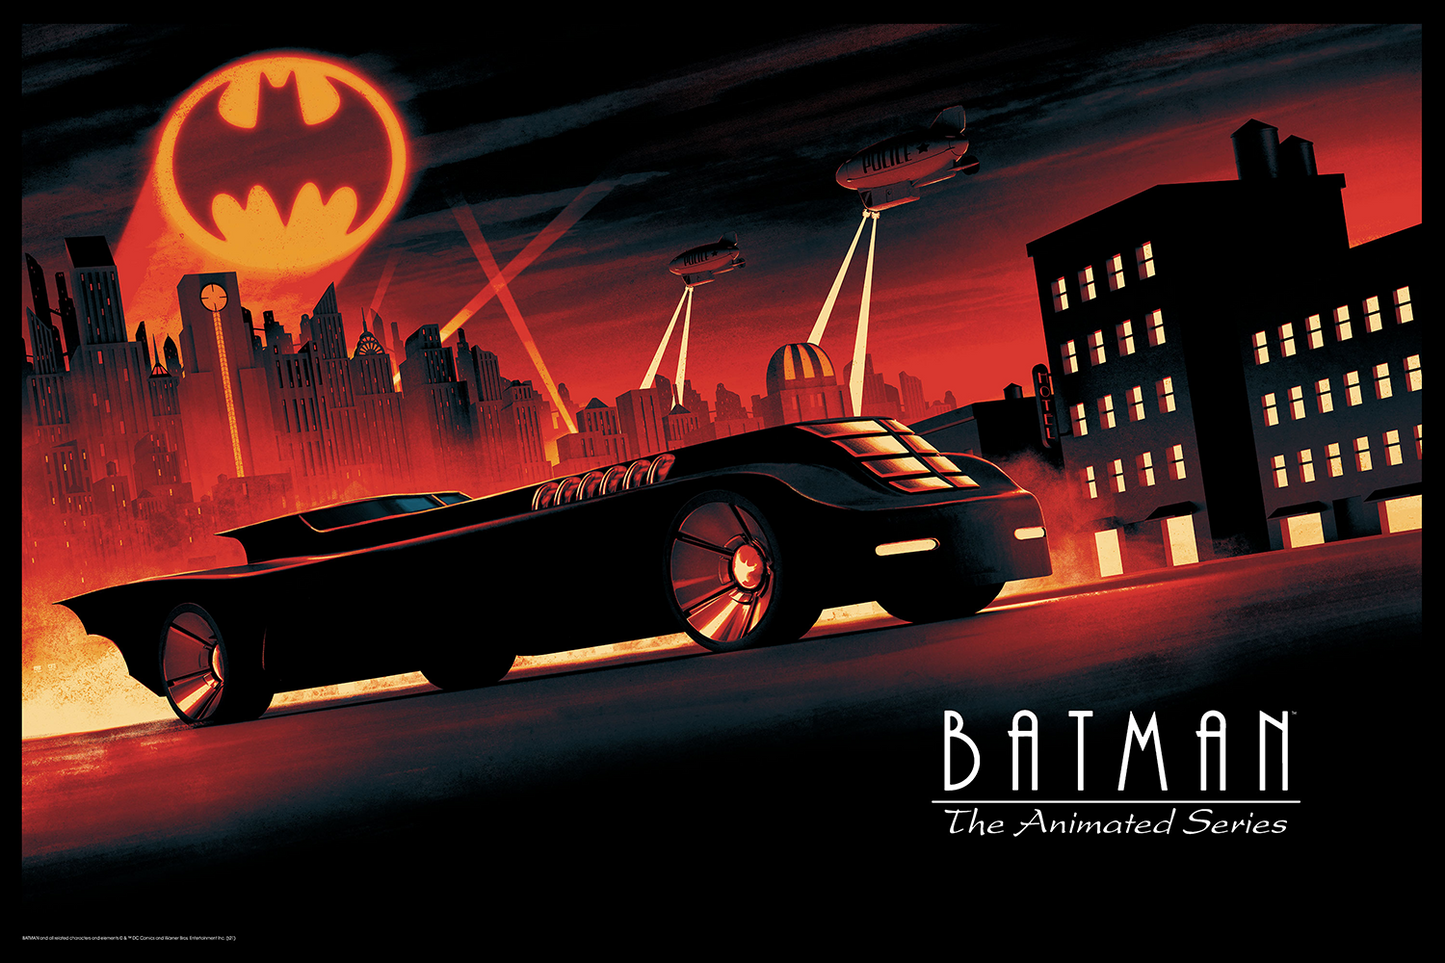 Matt Ferguson "Batman: The Animated Series"